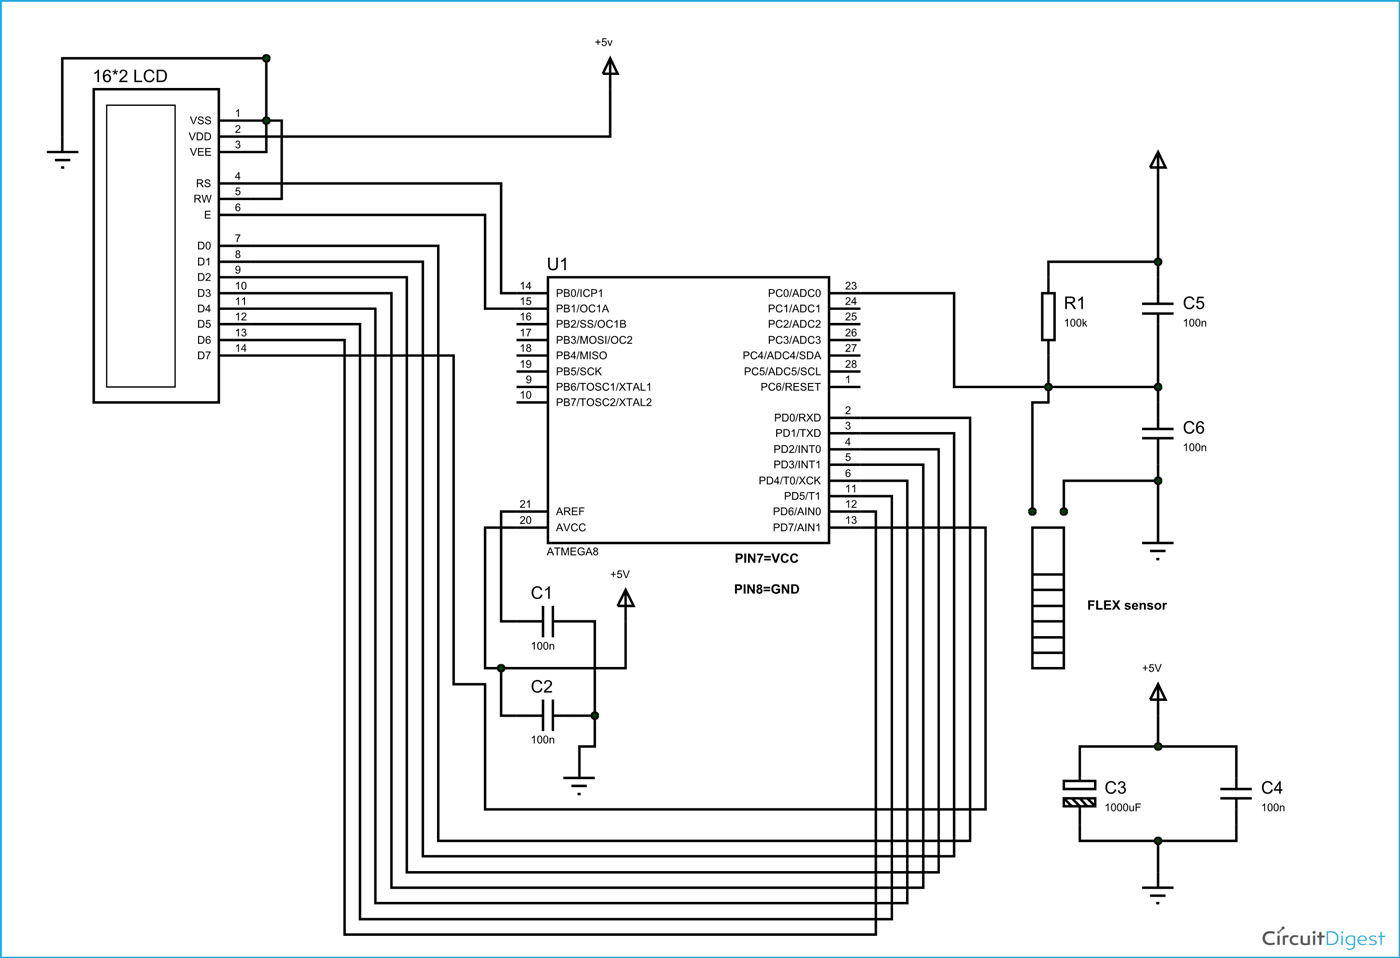 Circuit Diagram of Flex Sensor Interfacing with AVR Microcontroller